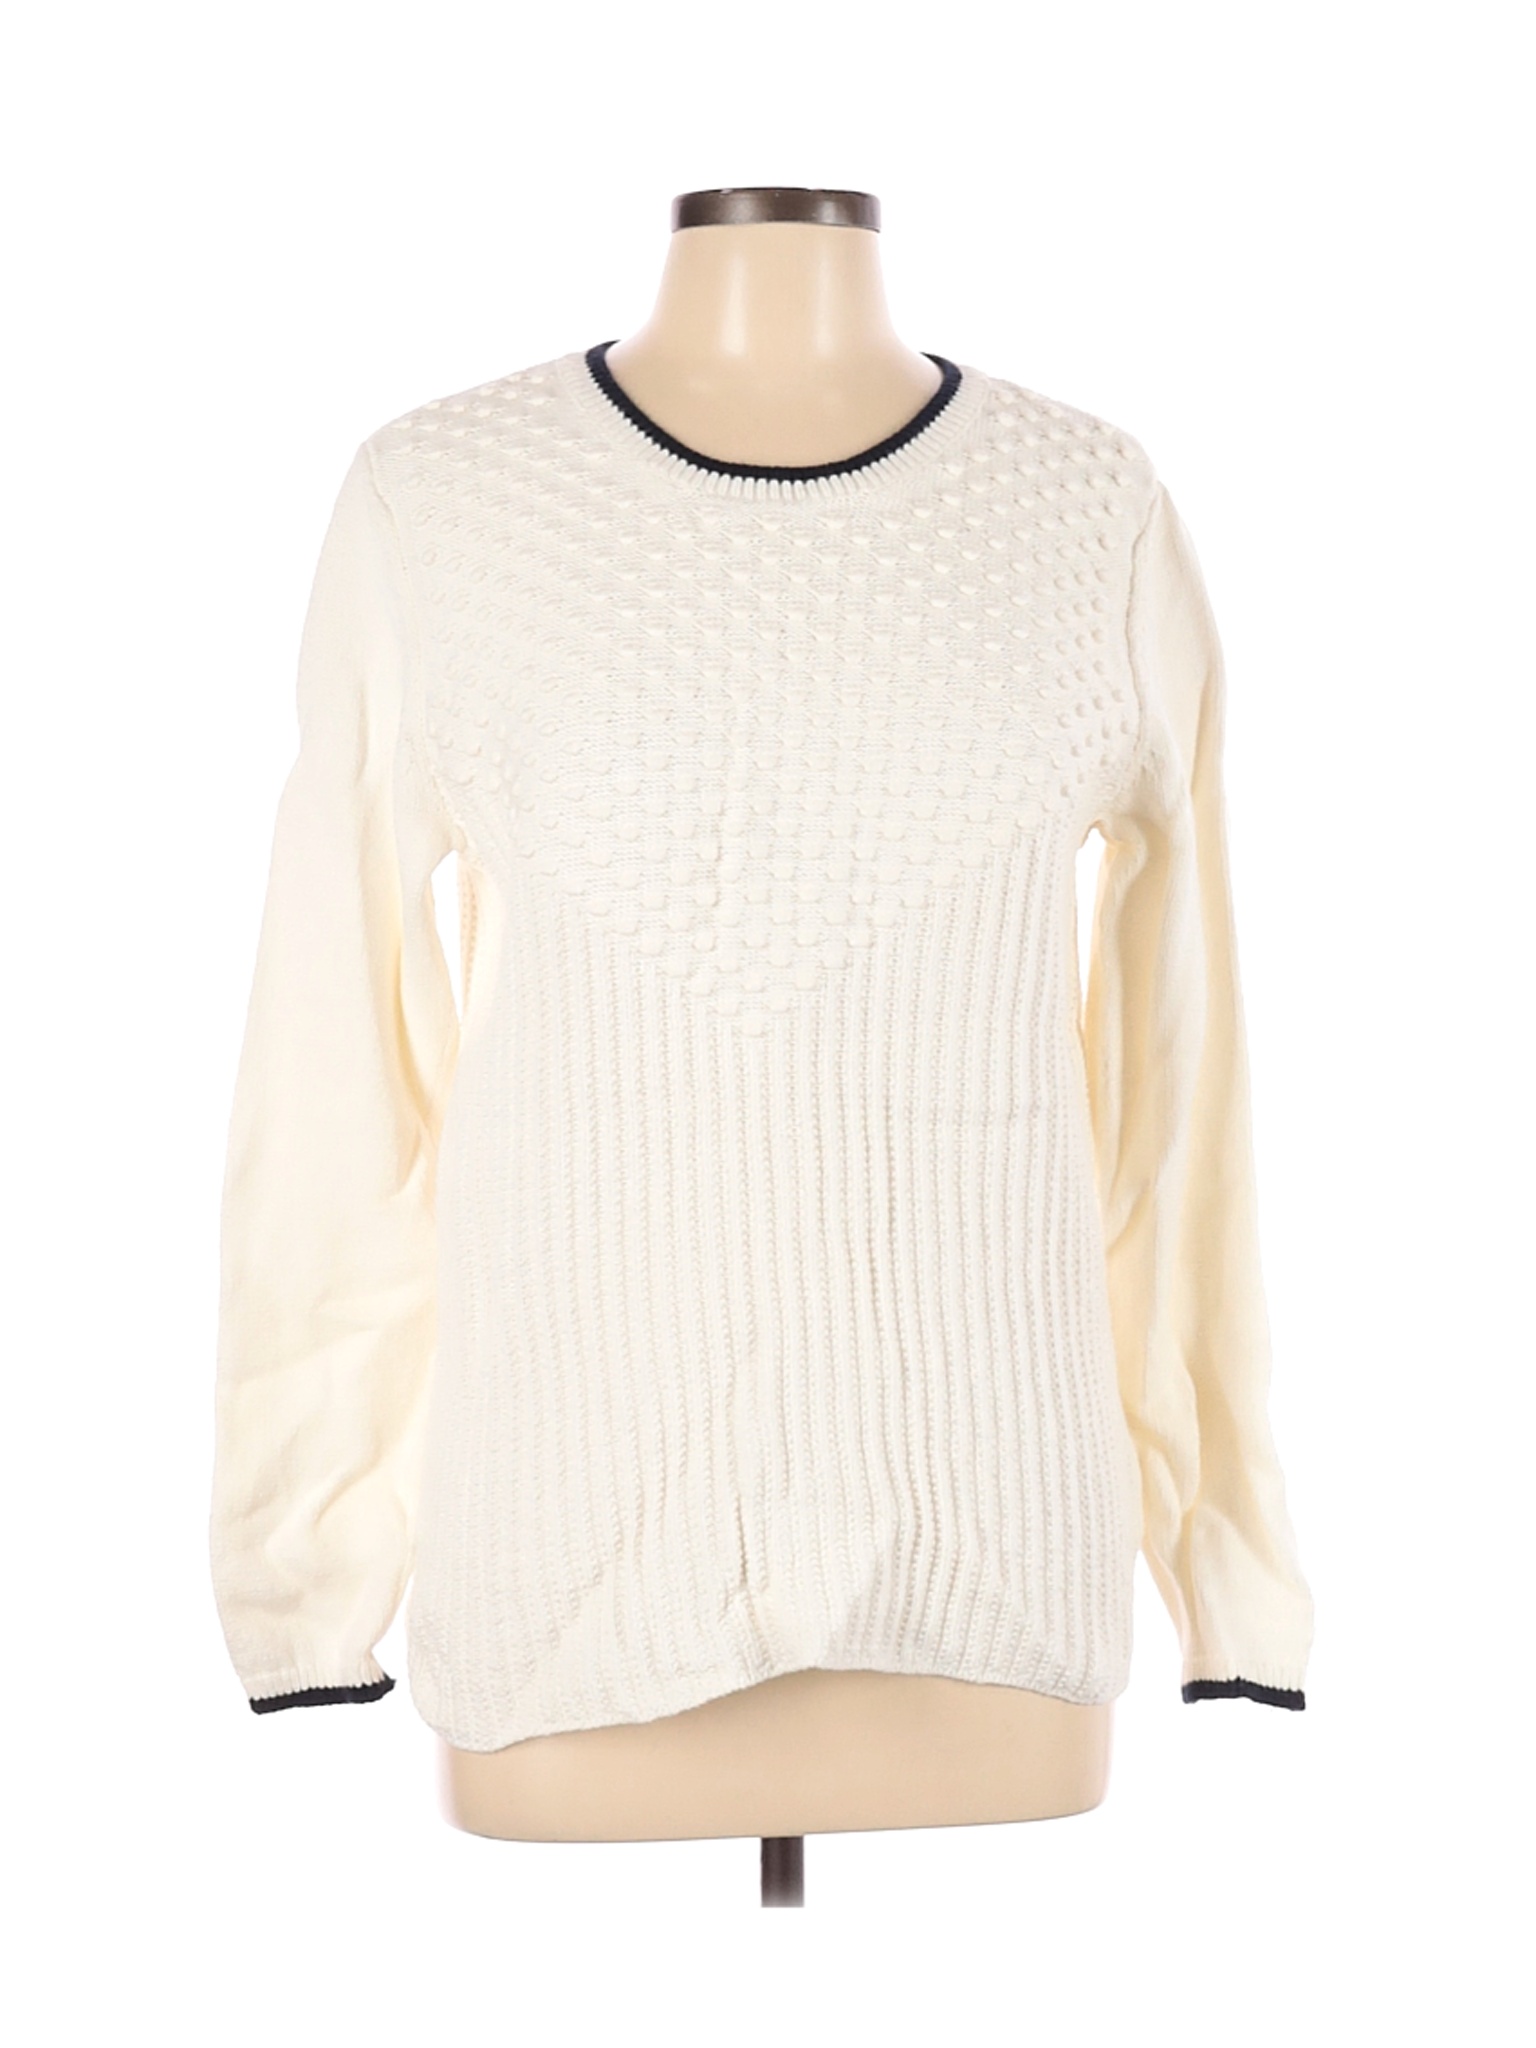 Talbots Women Ivory Pullover Sweater L | eBay